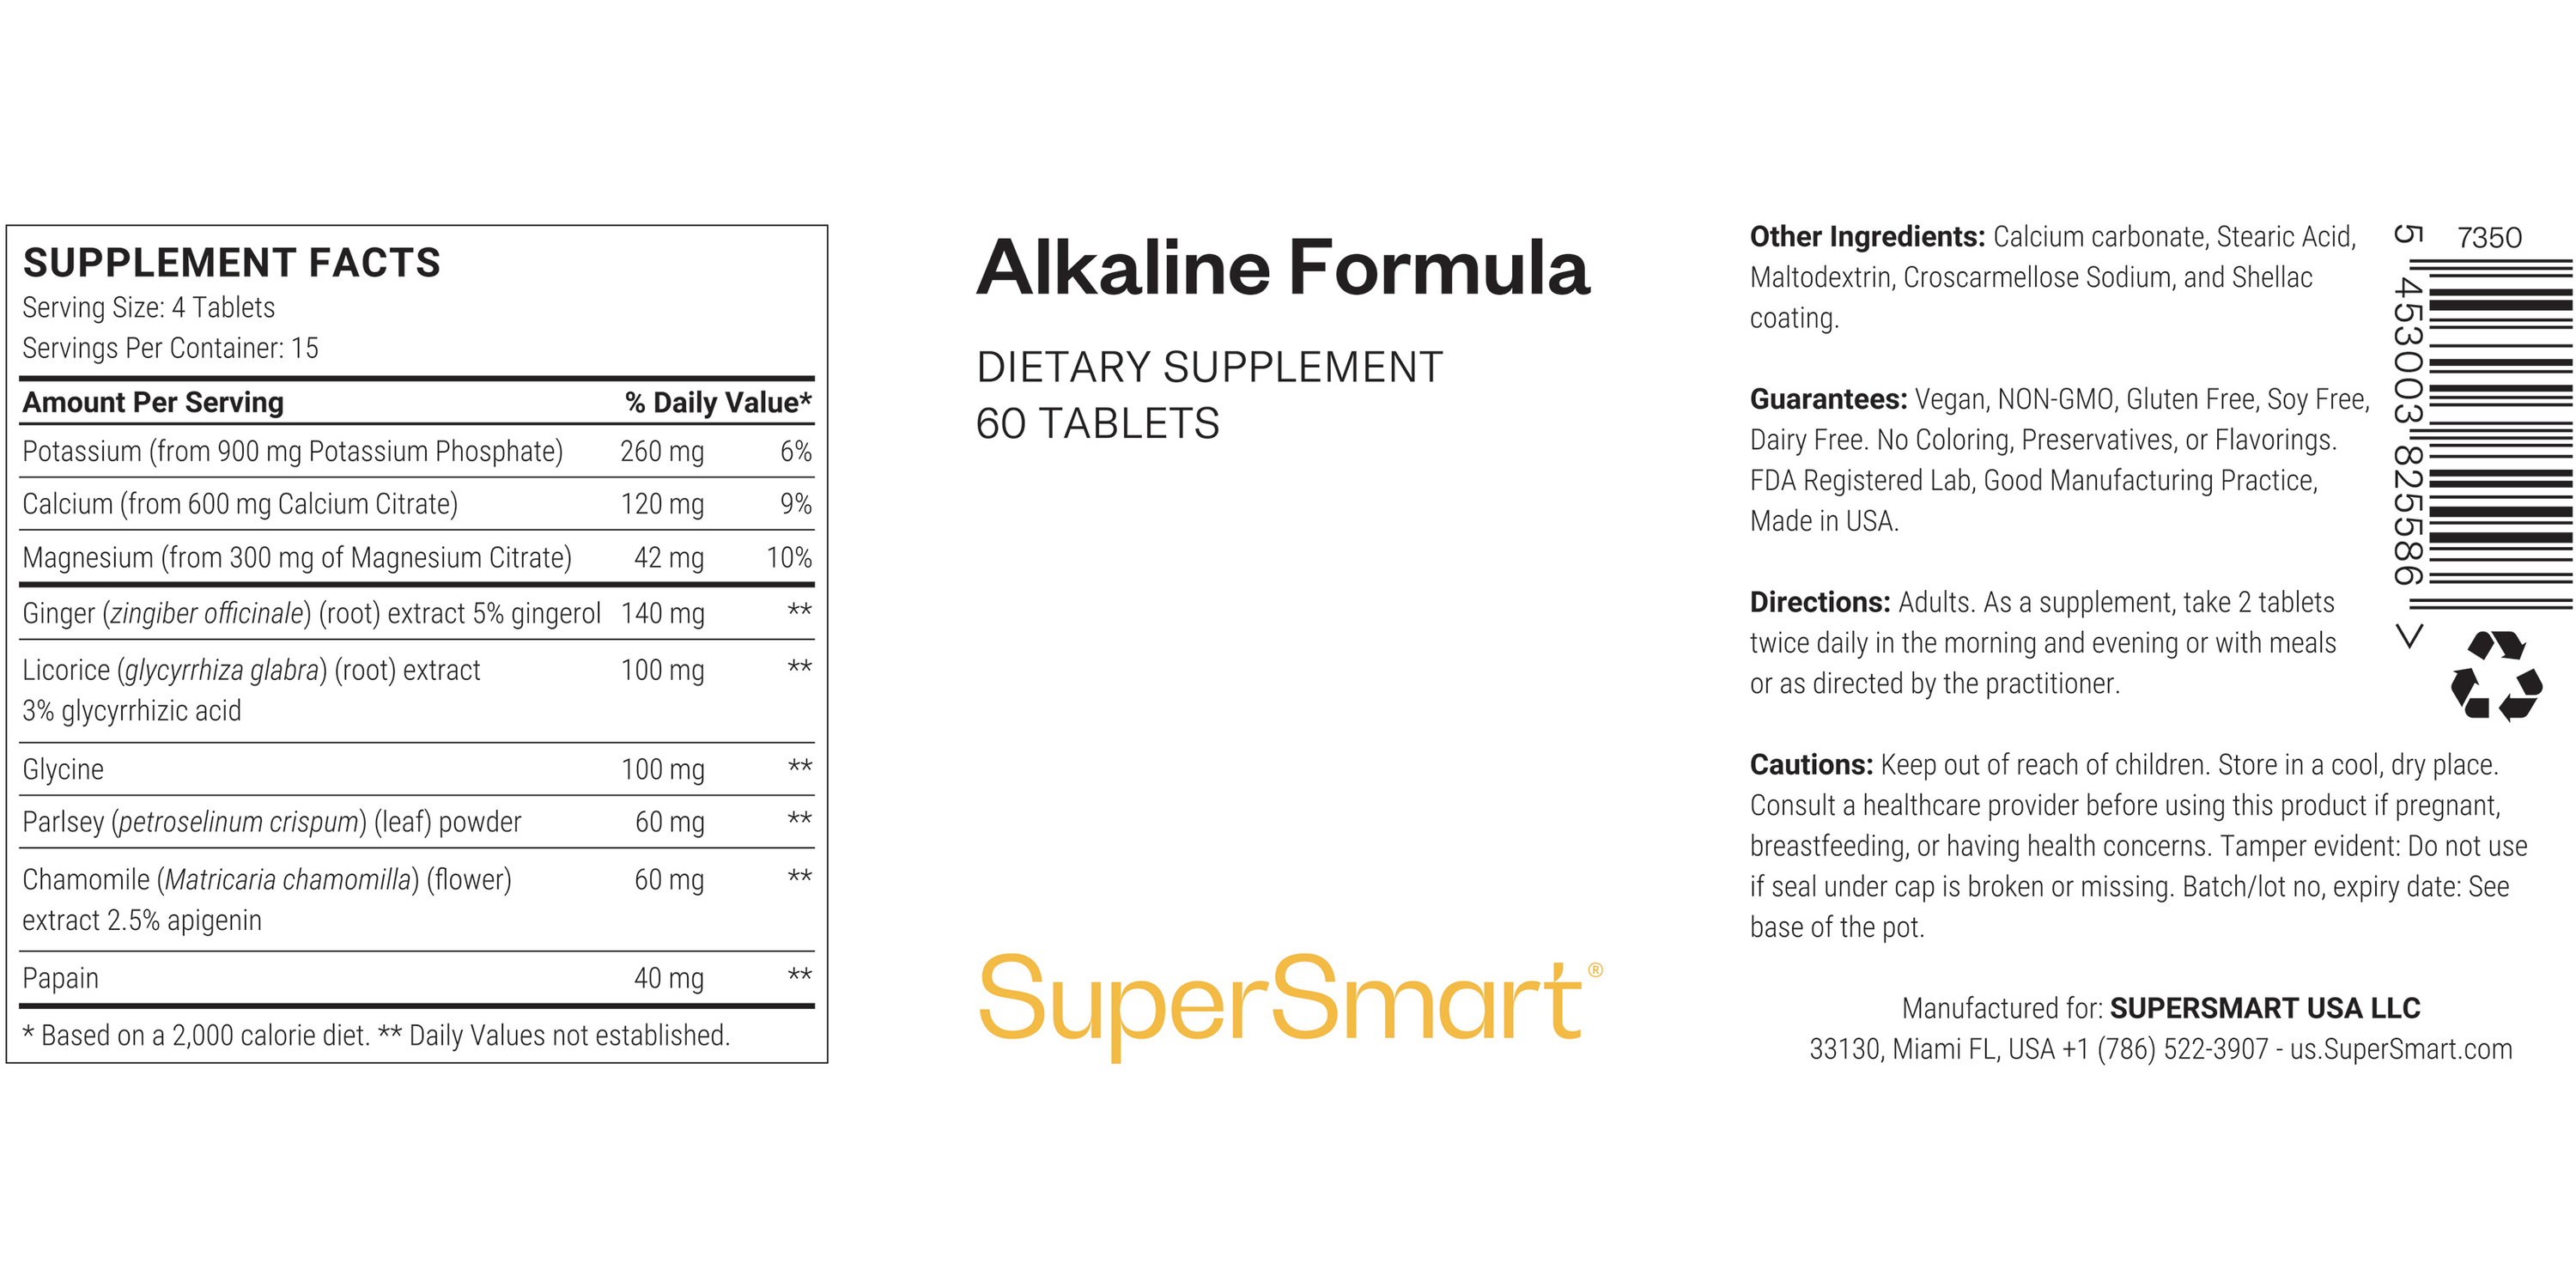 Alkaline Formula